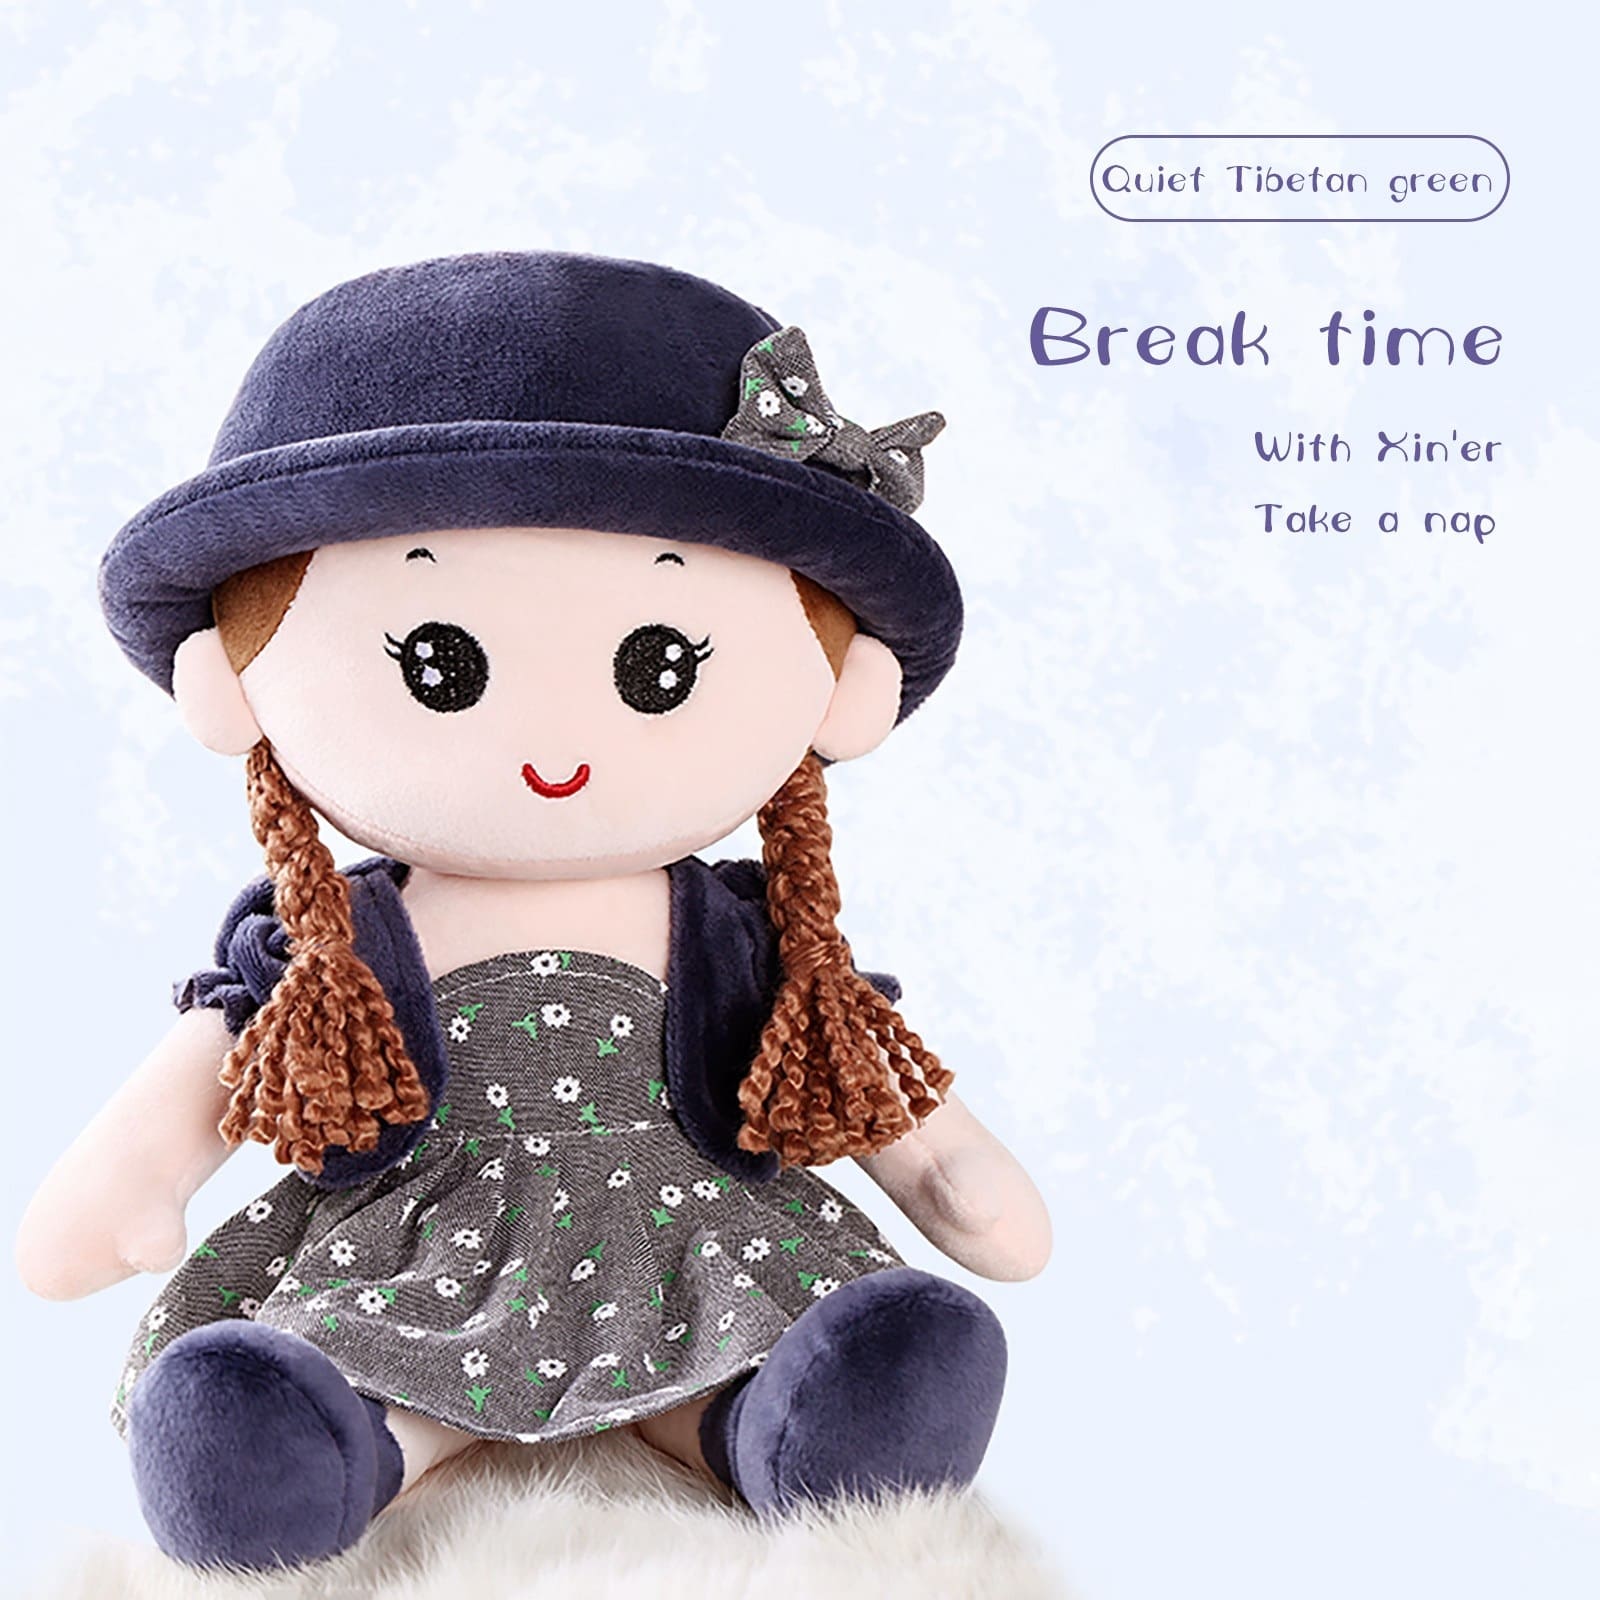 Cute Baby Girl Rag Doll Soft Stuffed Plush Toy for Gils Gift